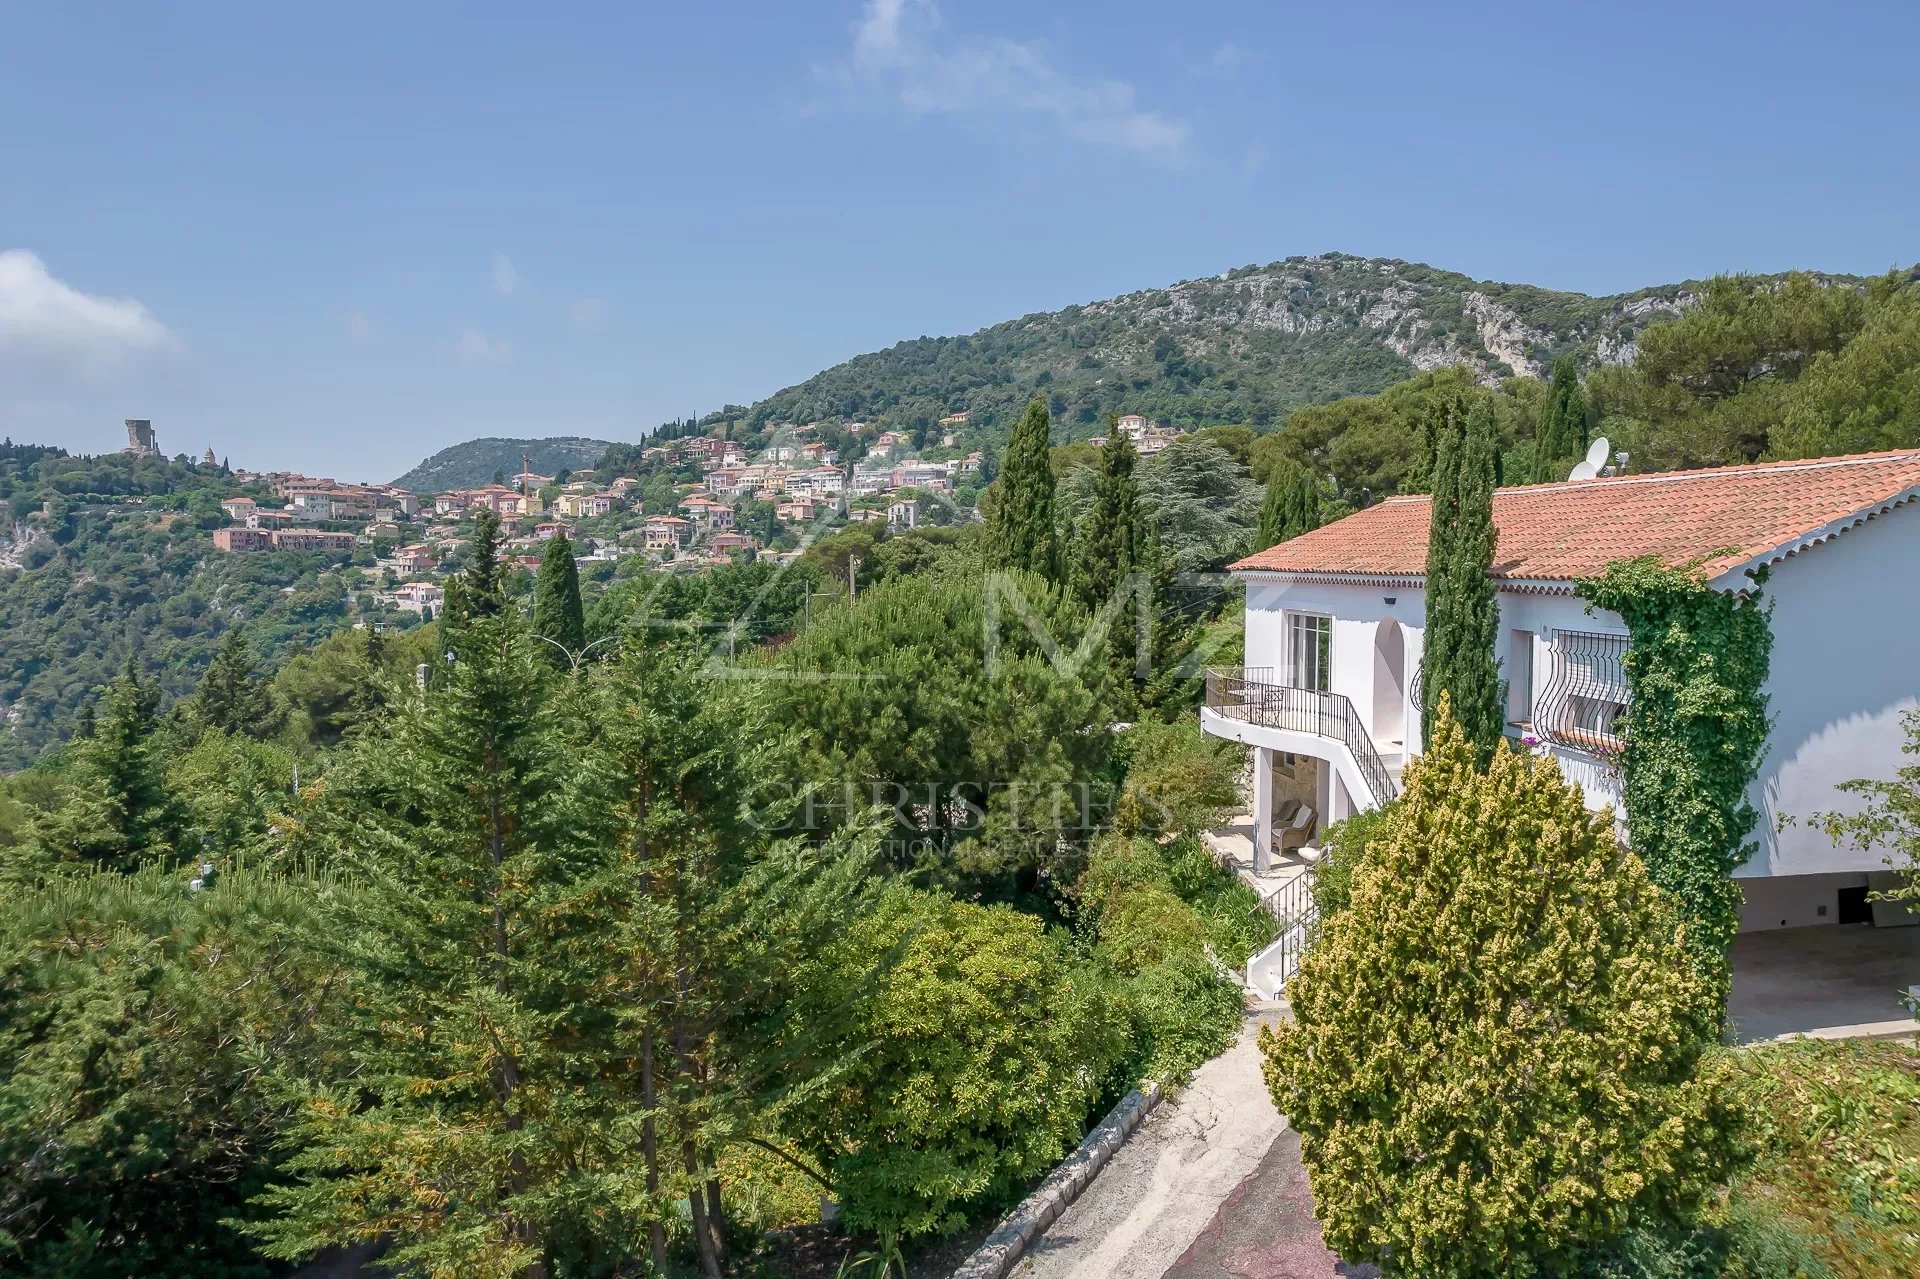 Close to Monaco - Provencal villa overlooking the sea